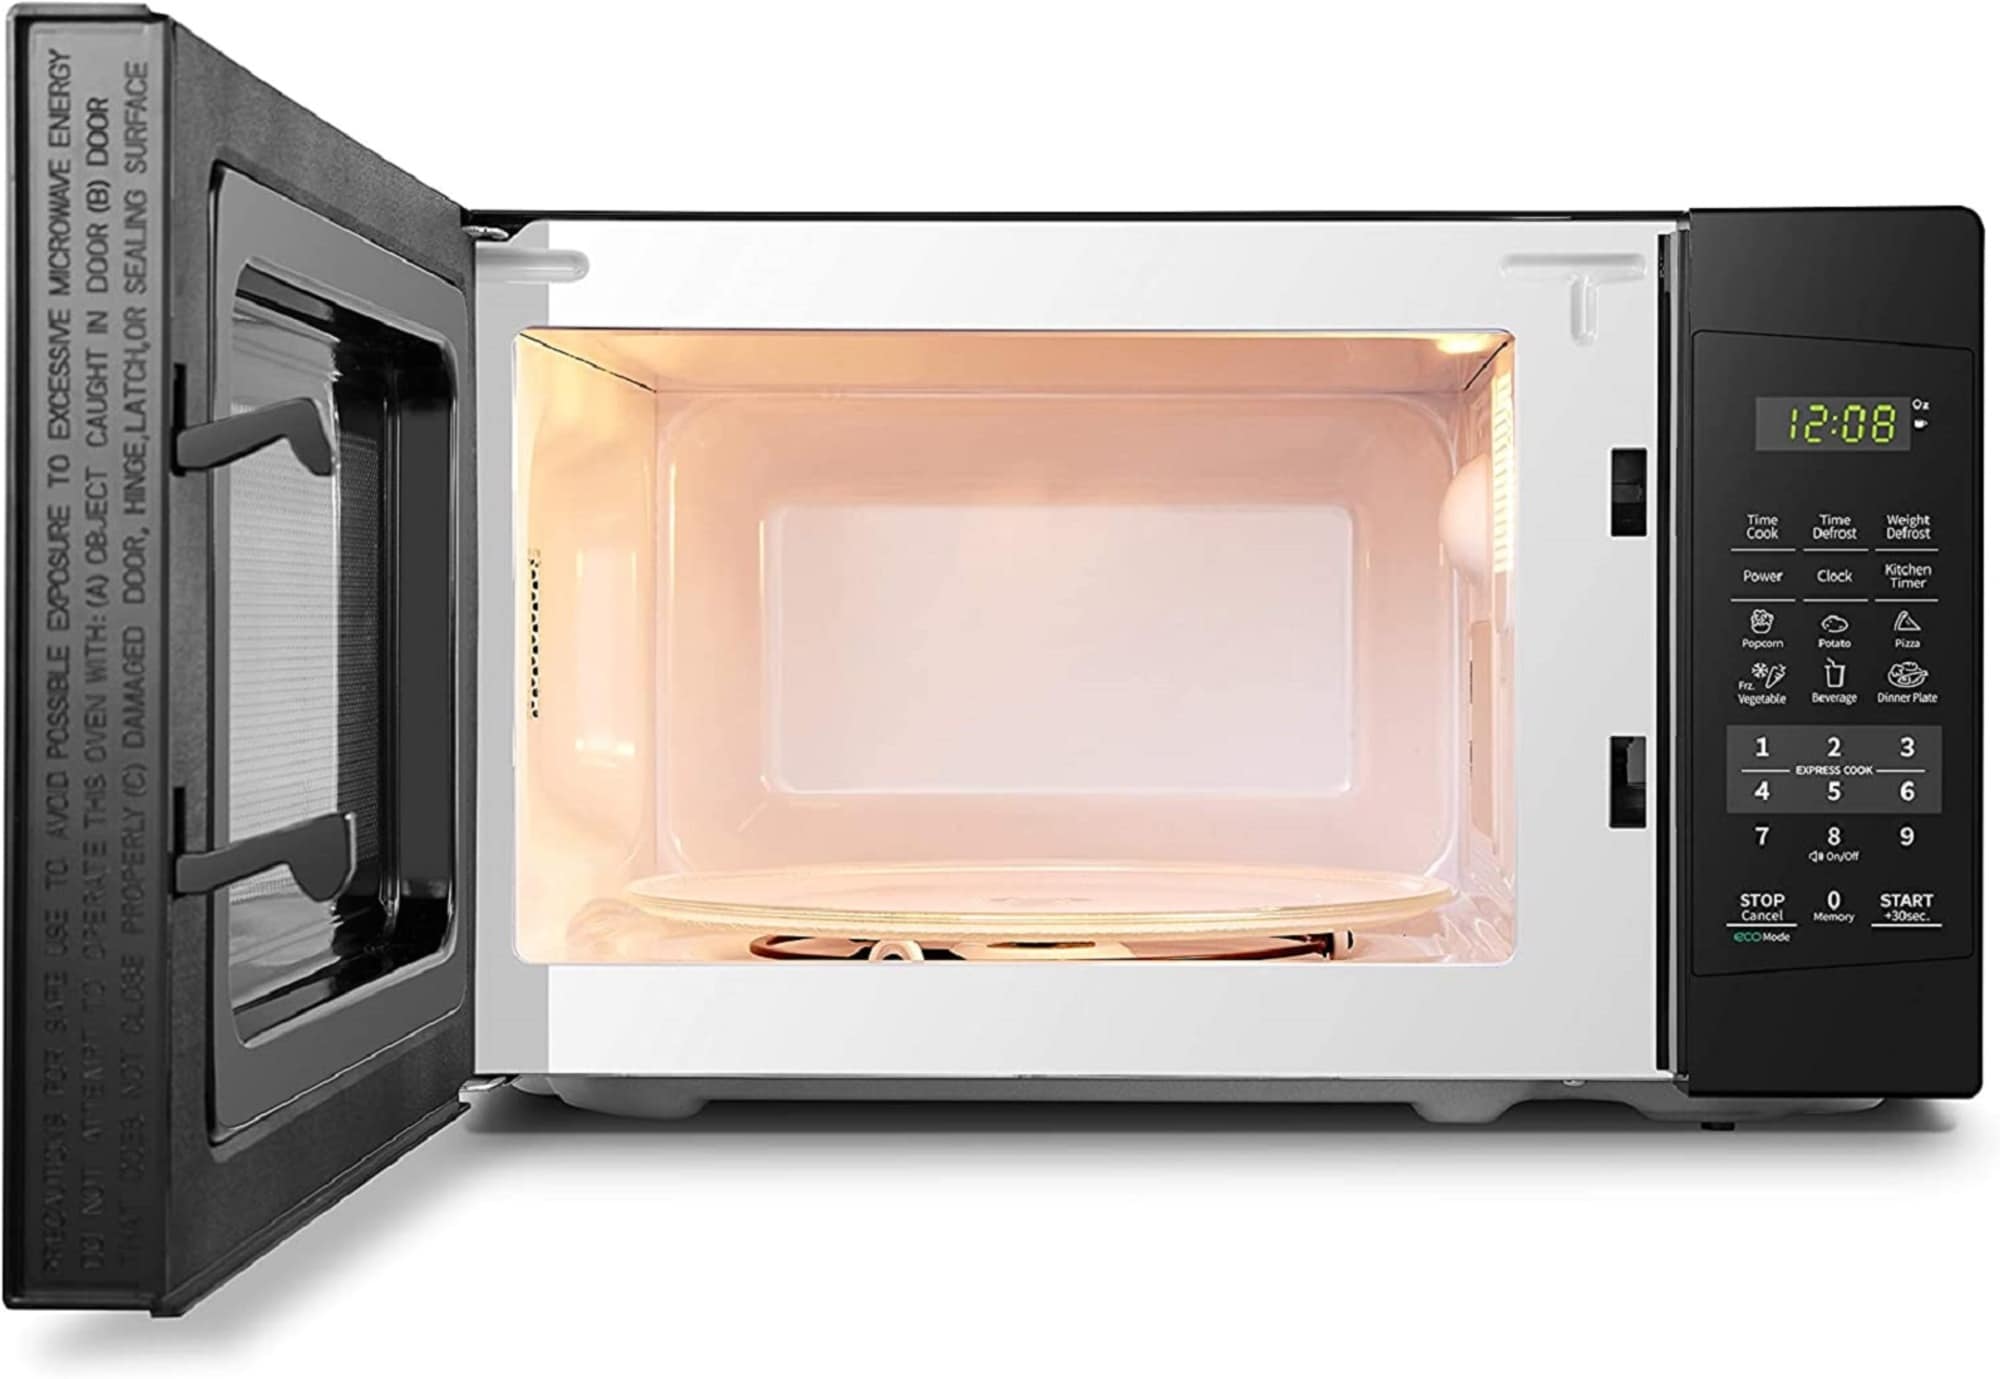 Comfee' 0.7 cu. ft. 700 Watt Compact Countertop Microwave in Cream